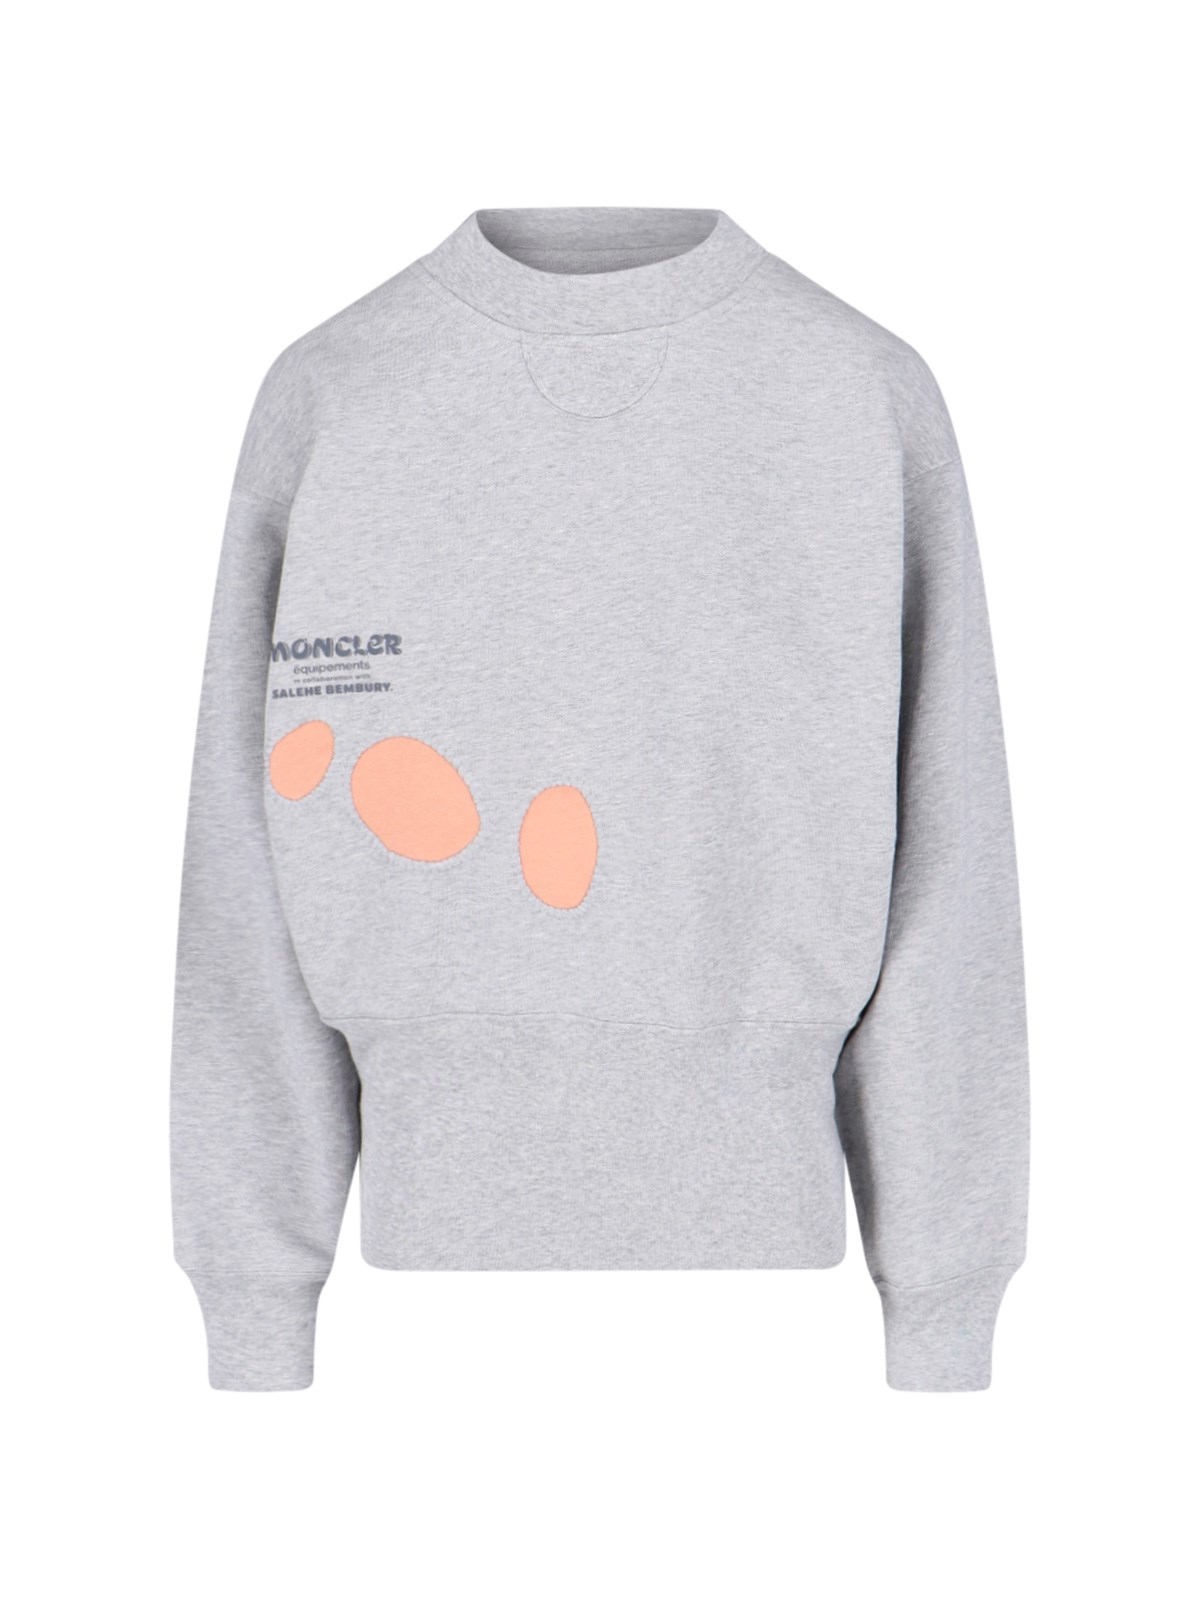 Moncler Genius X Salehe Bembury Crewneck Sweatshirt In Grey